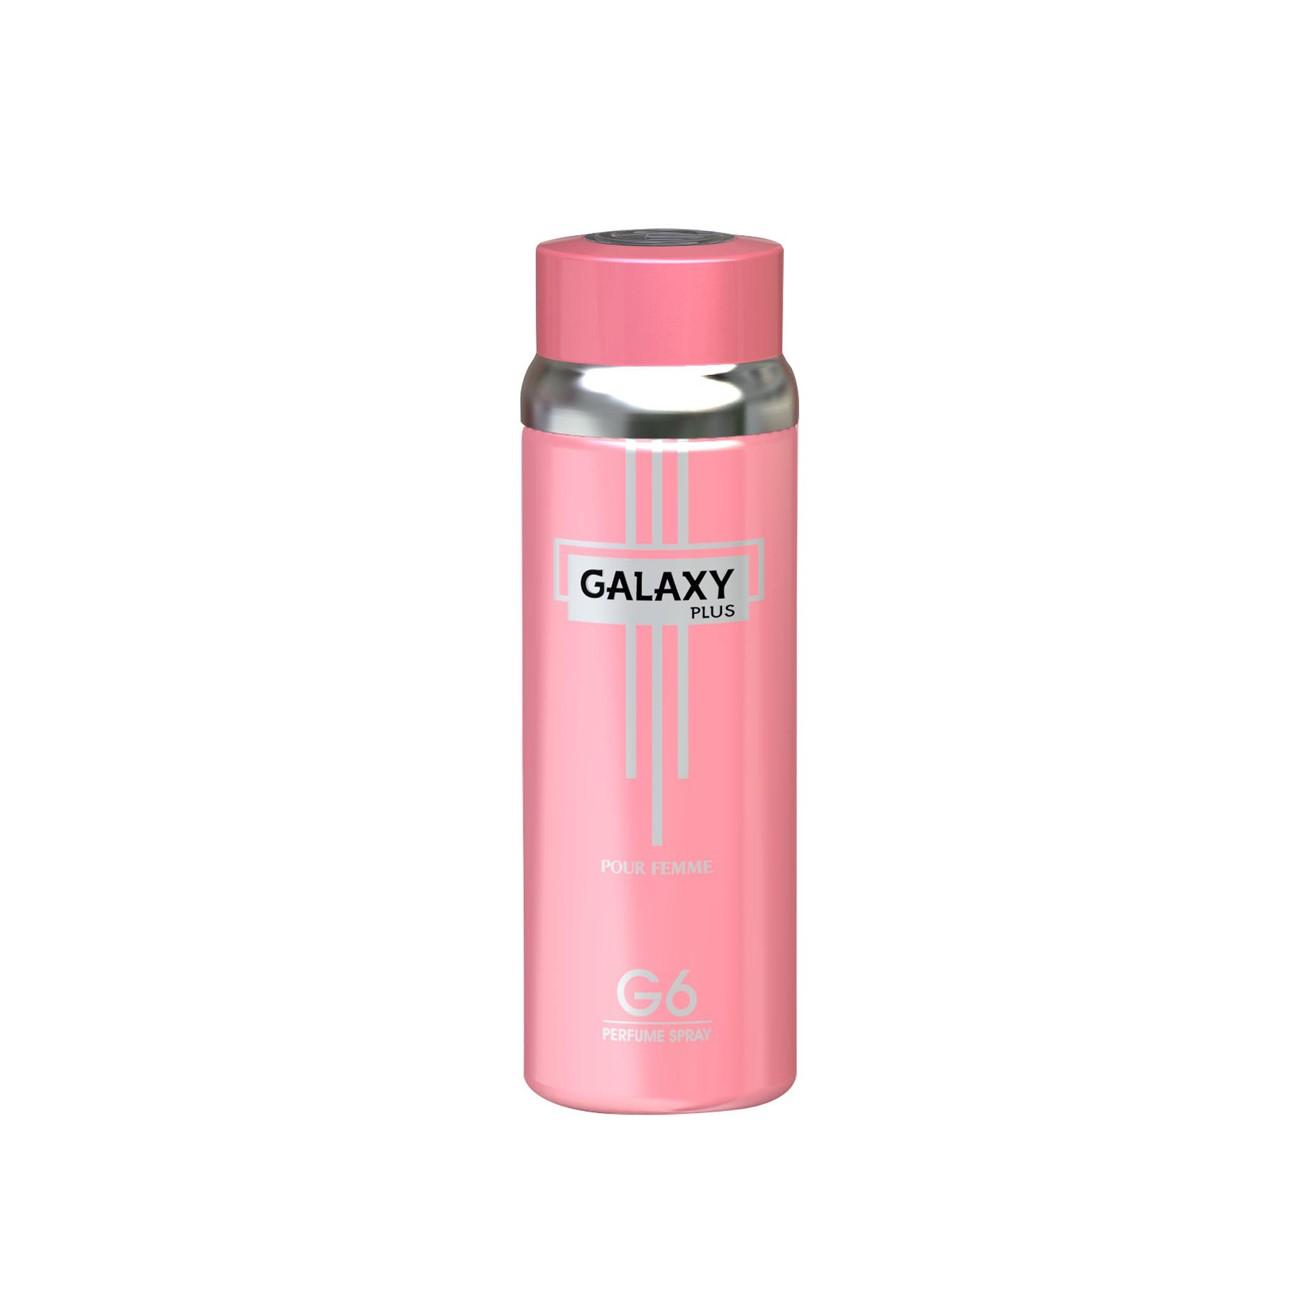 Galaxy Plus G6 200Ml Perfume Spray Pour Femme